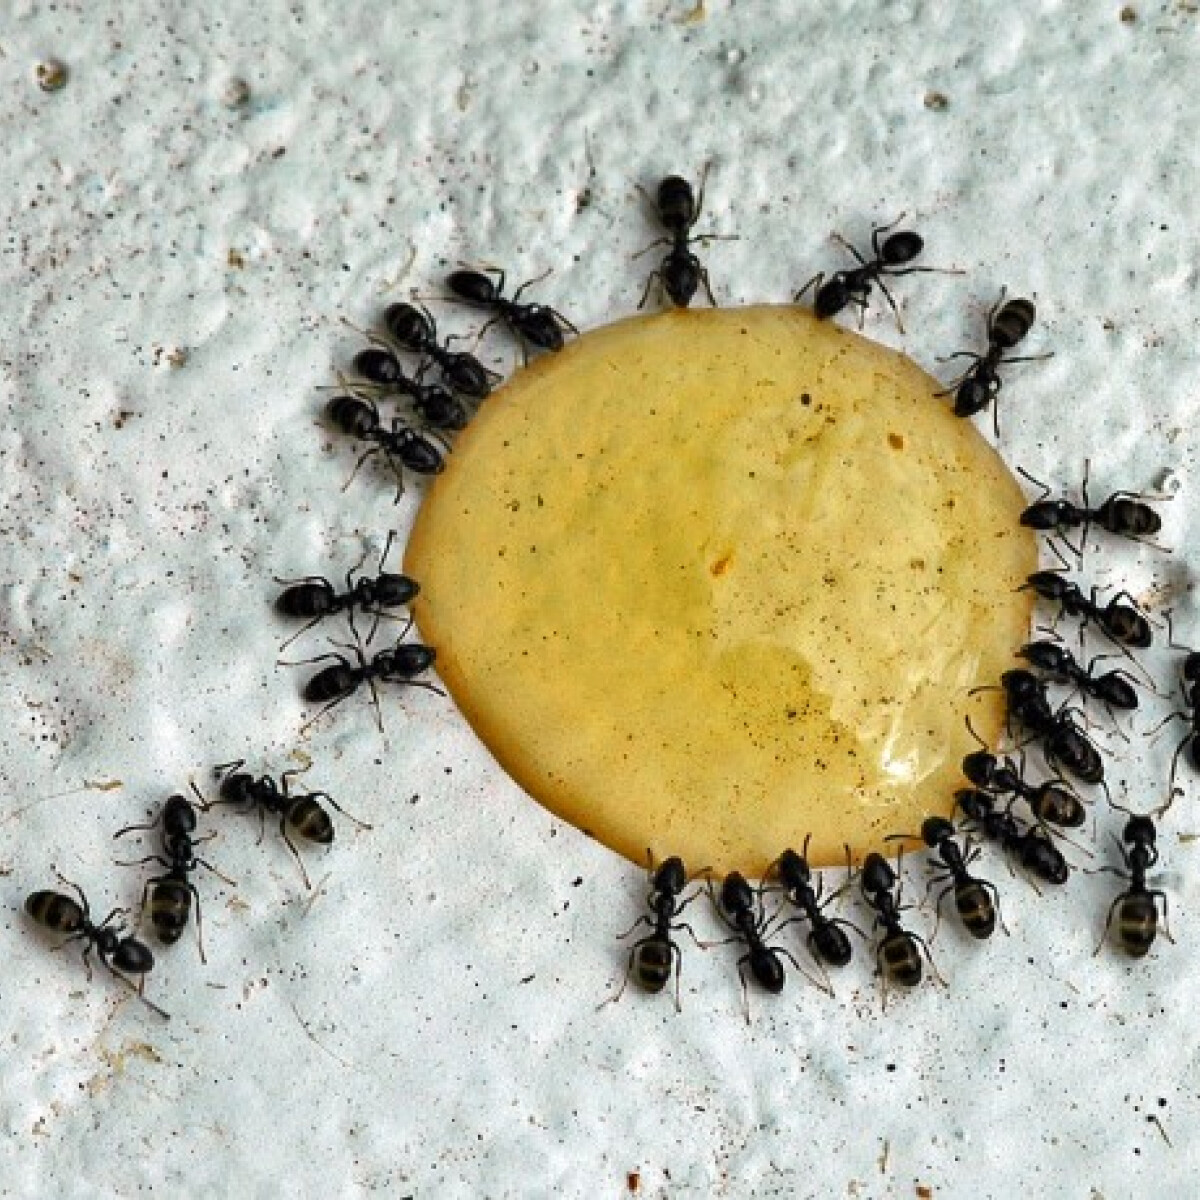 Bio Bio Baby citromos muskátlikivonatos spray rovarok (szúnyog, kullancs) ellen 100 ml